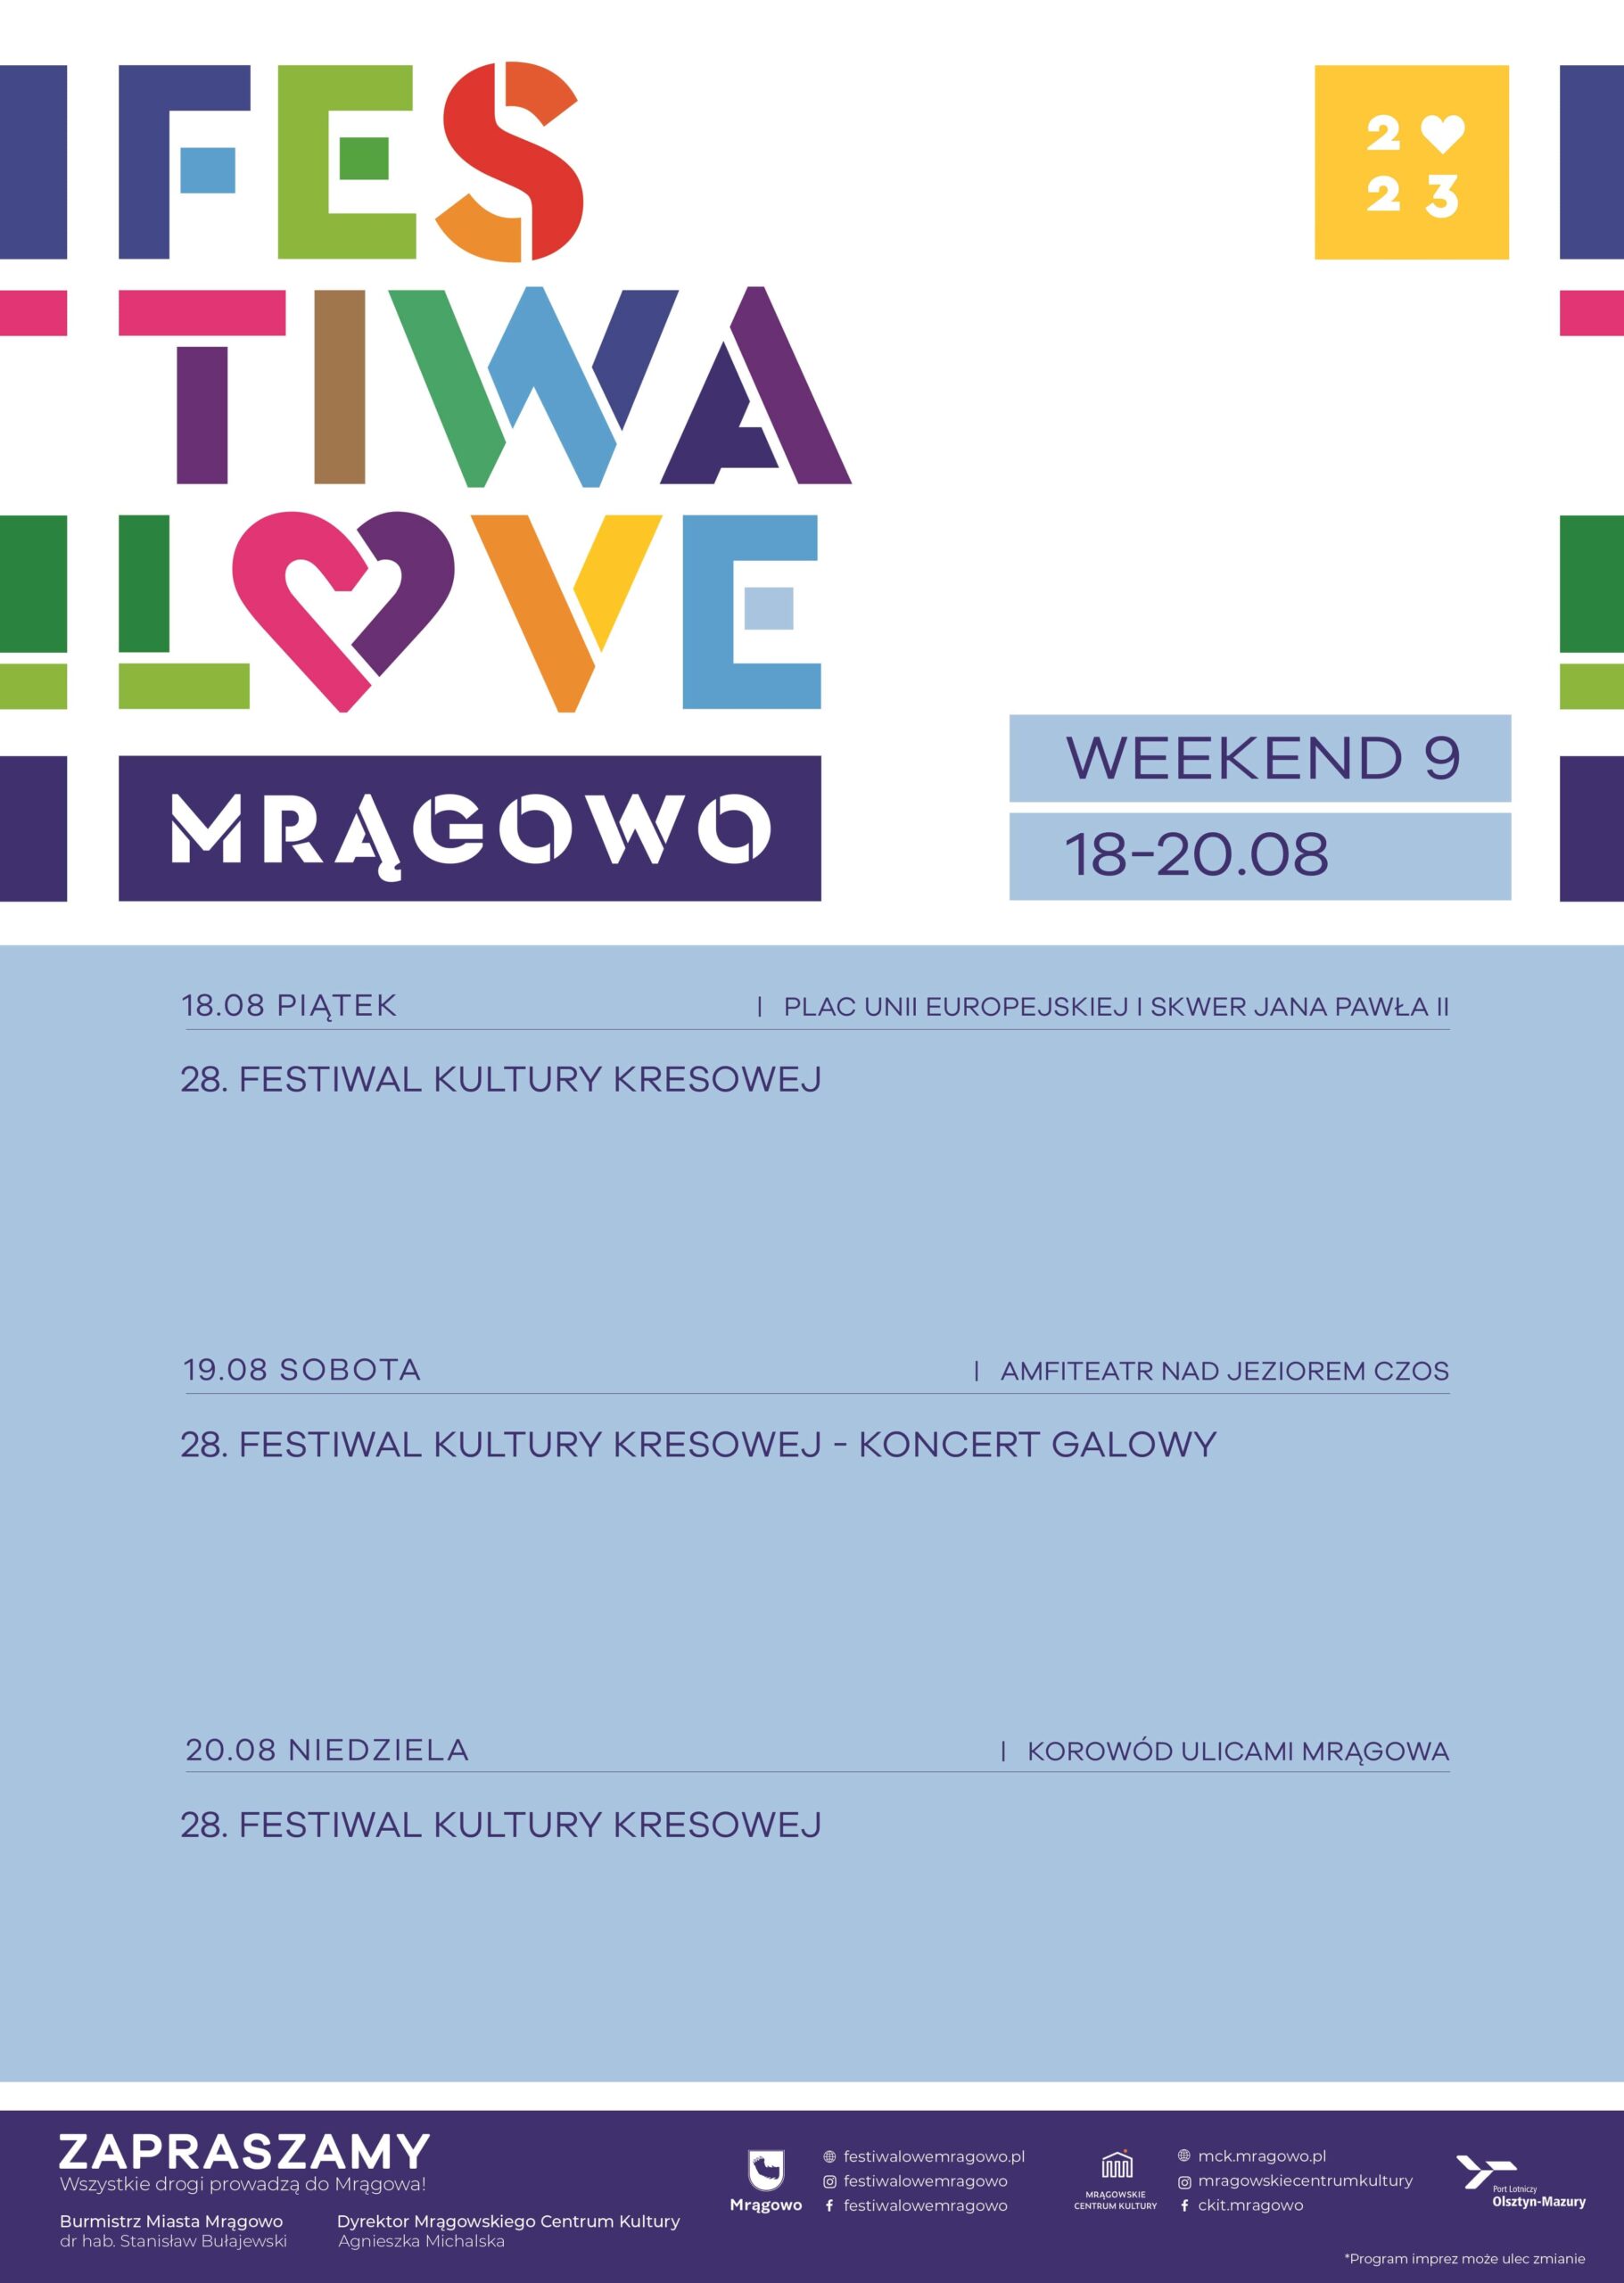 Festiwalowe Mrągowo - weekend IX